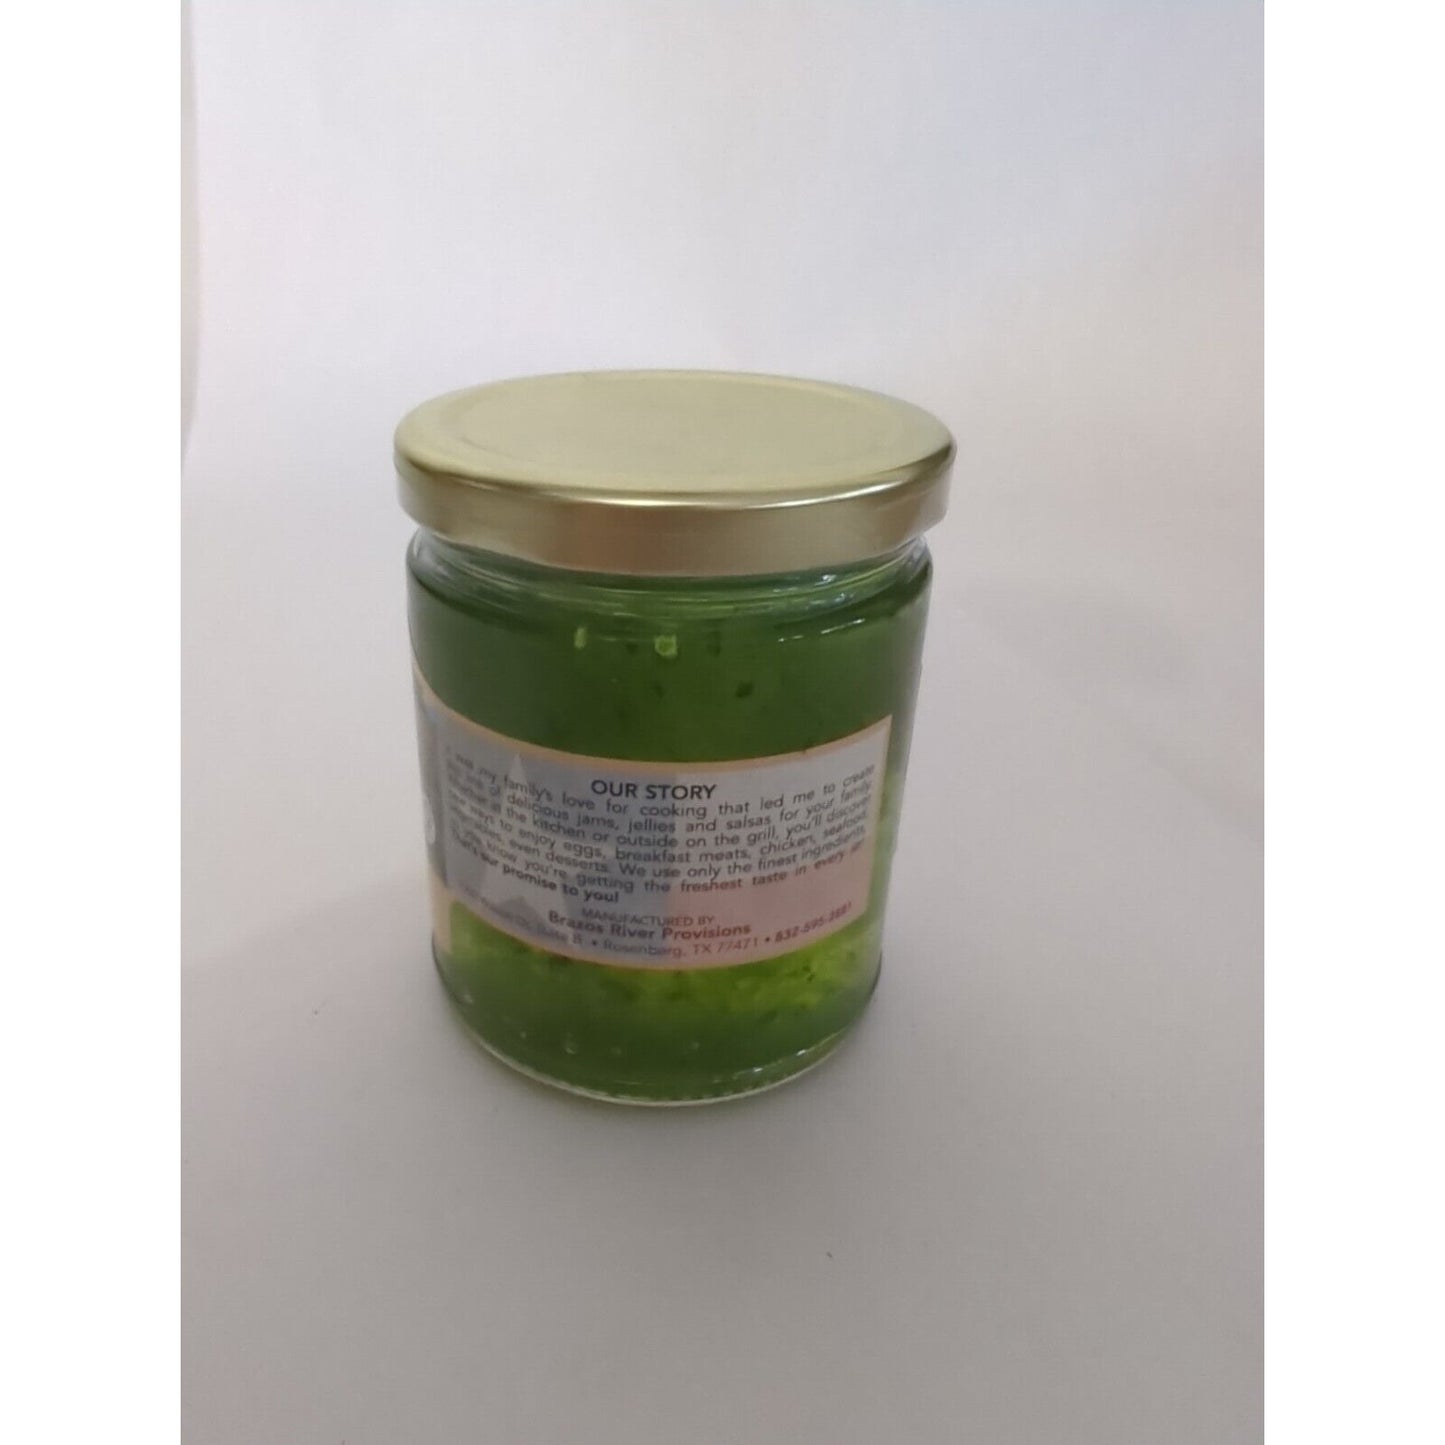 Brazos River Provisions Company Jalapeno Mint Jelly 9 Ounce Glass Jar